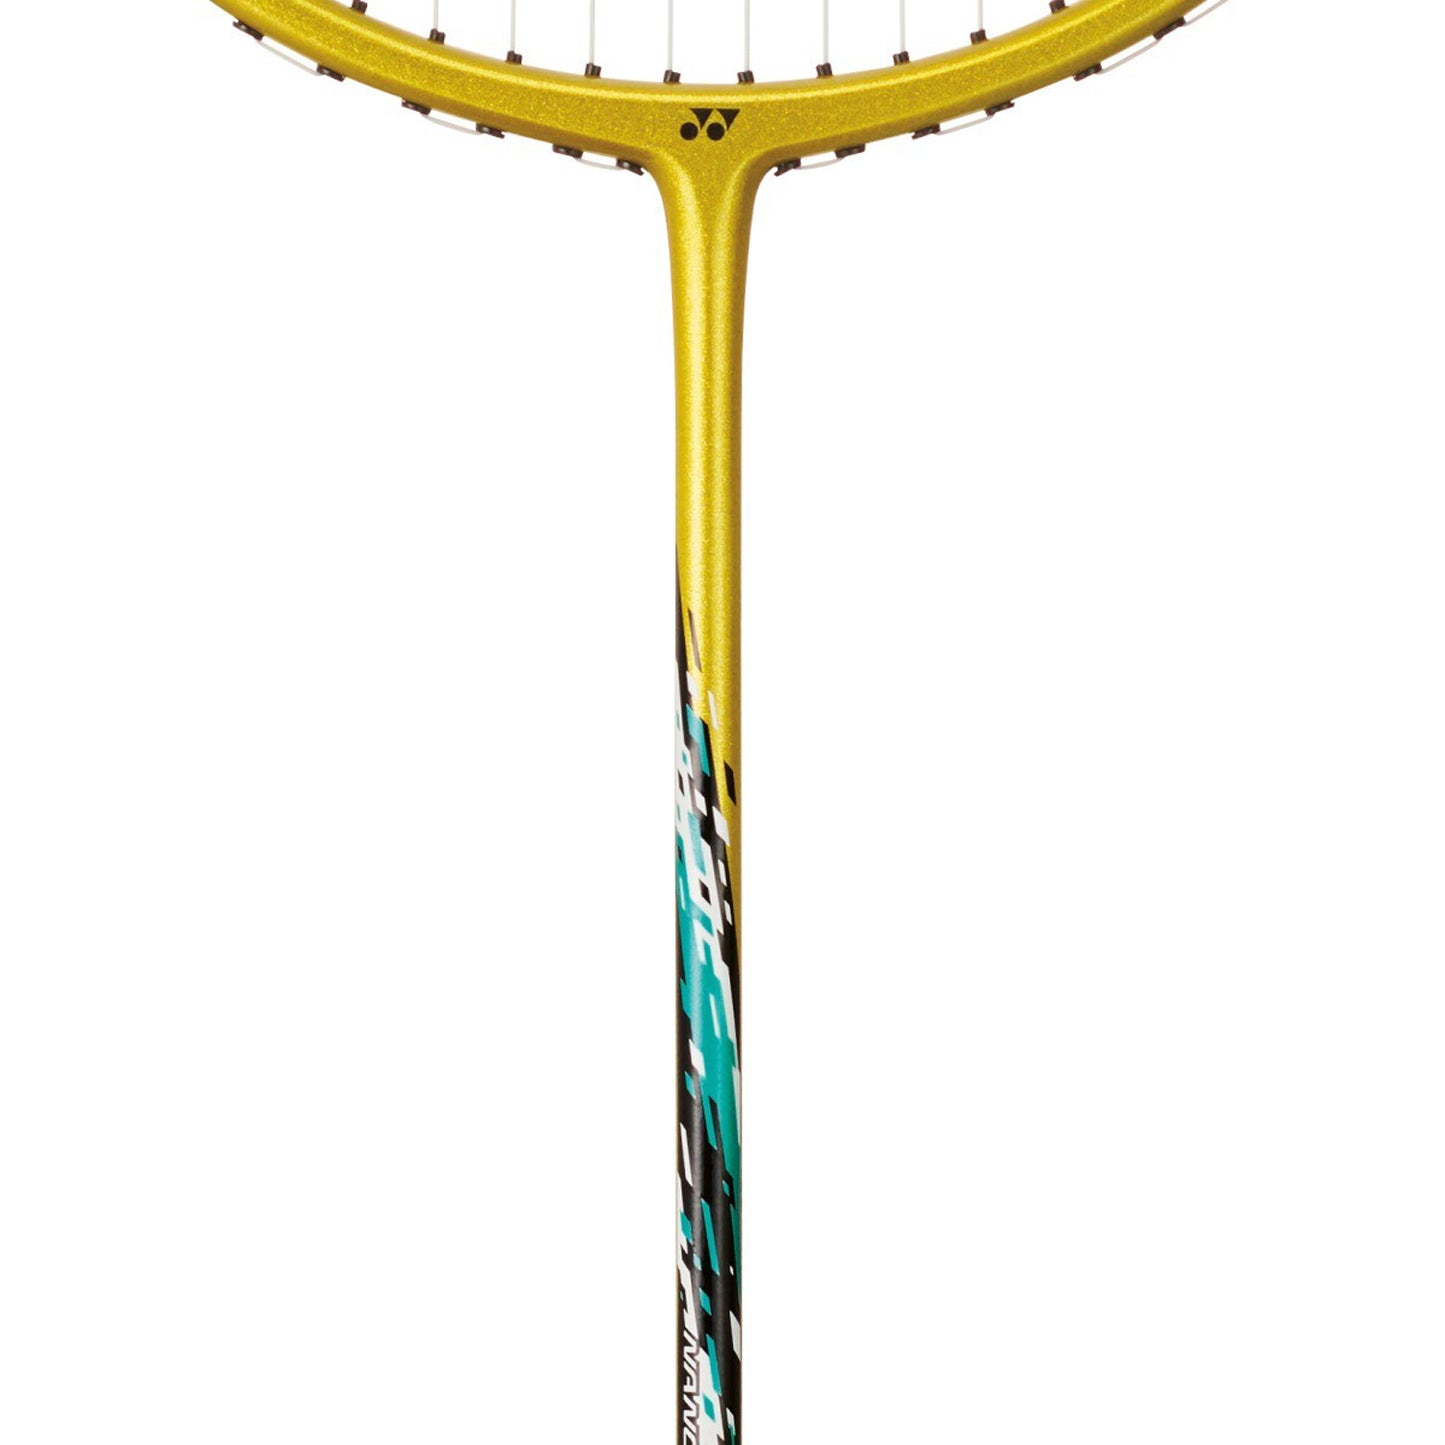 Yonex Nanoflare 001 Feel Strung Badminton Racquet, G4 - Best Price online Prokicksports.com